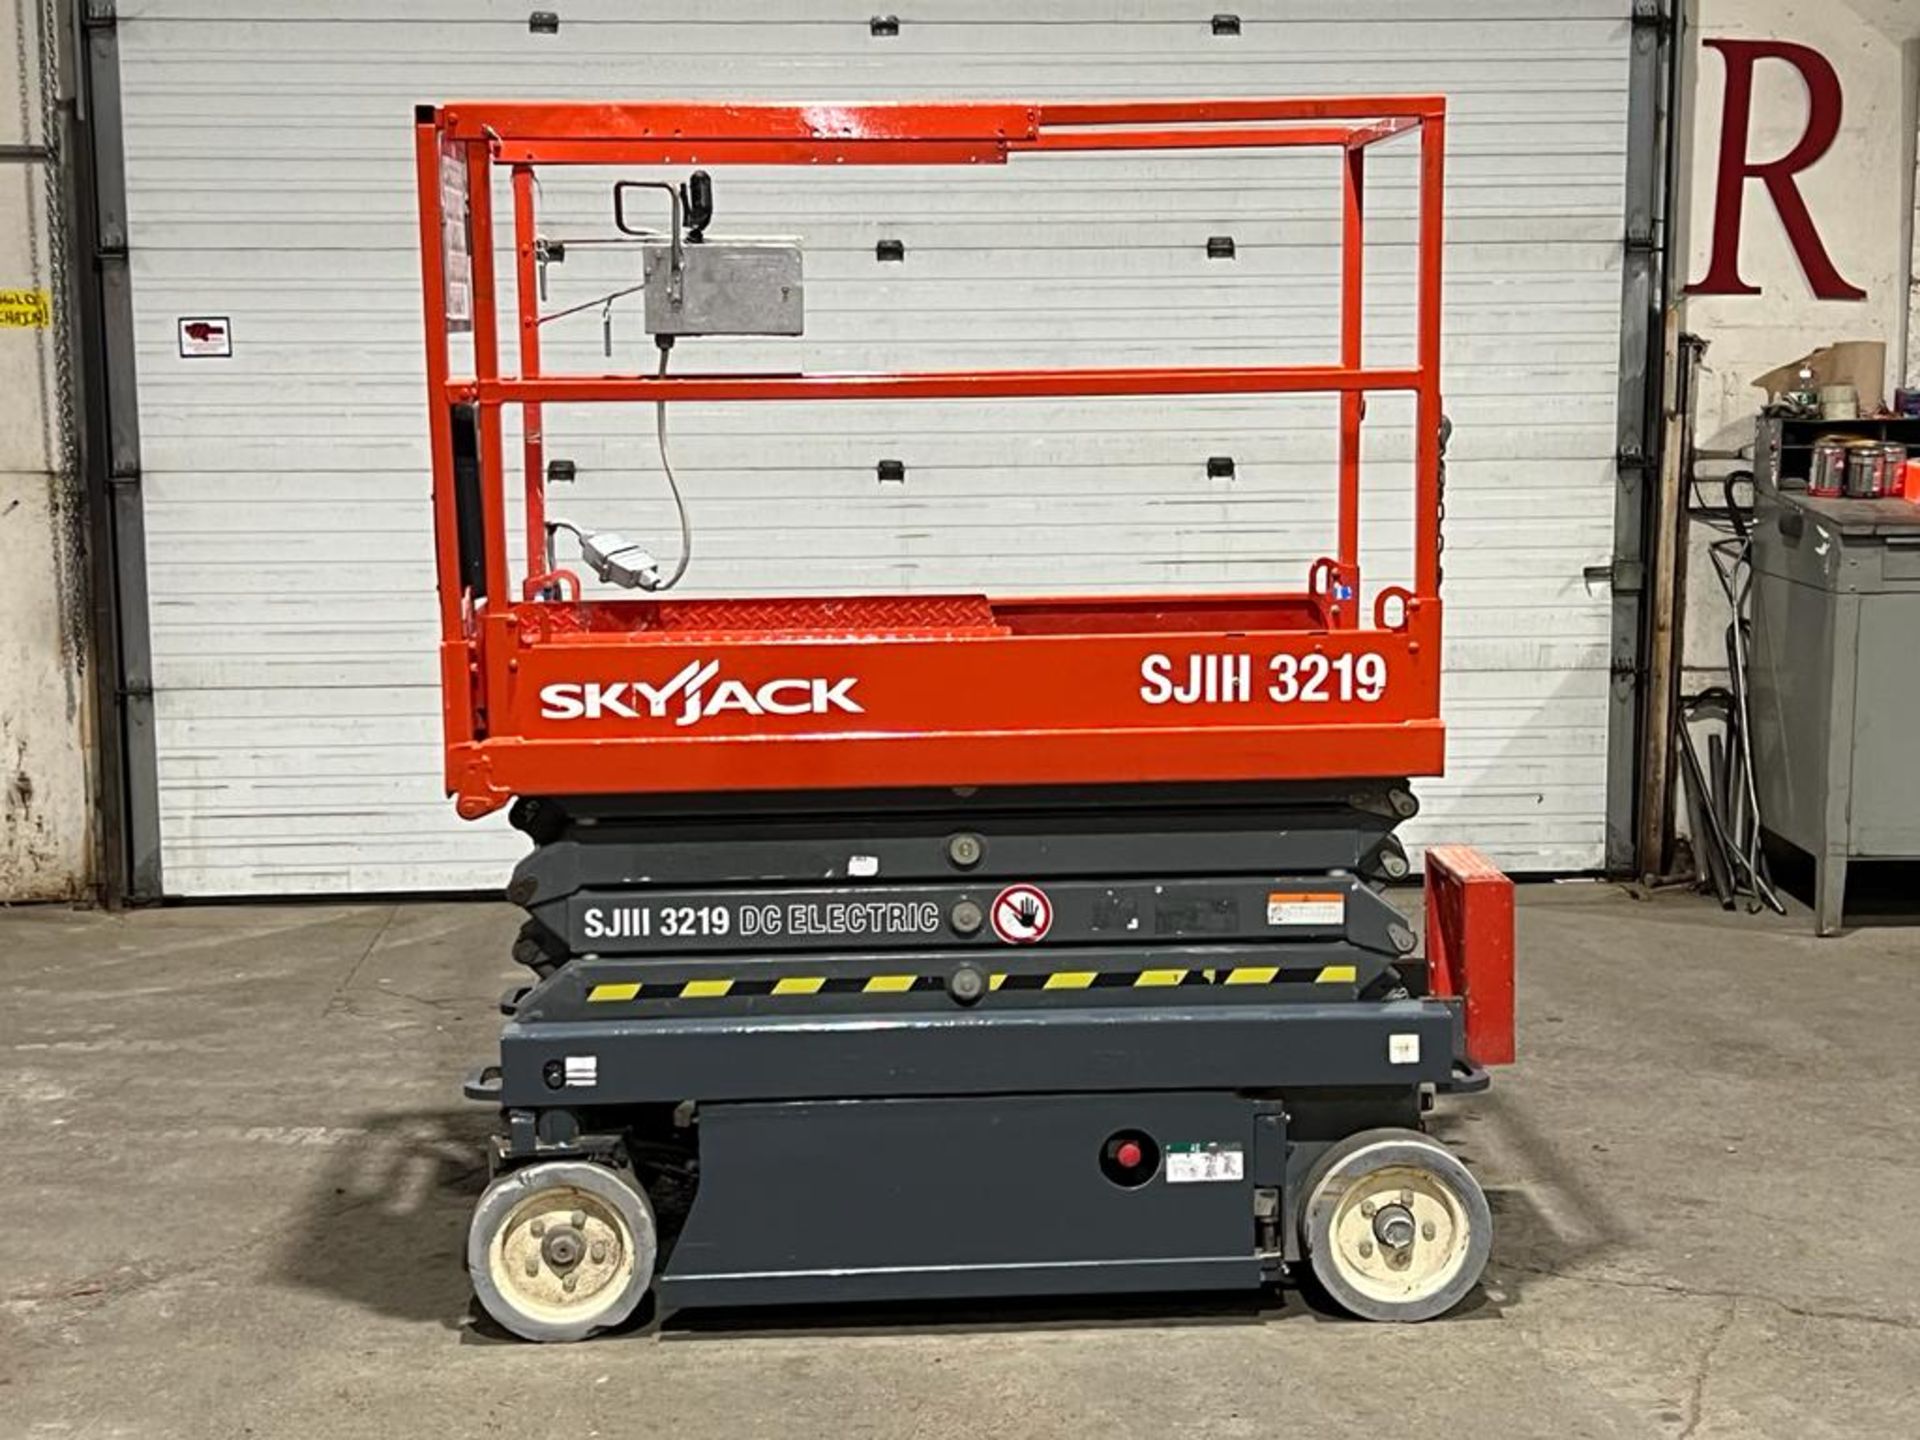 2013 SkyJack III Electric Scissor Lift model 3219 - 19 feet lift, 32 inch width deck with pendant - Image 3 of 4